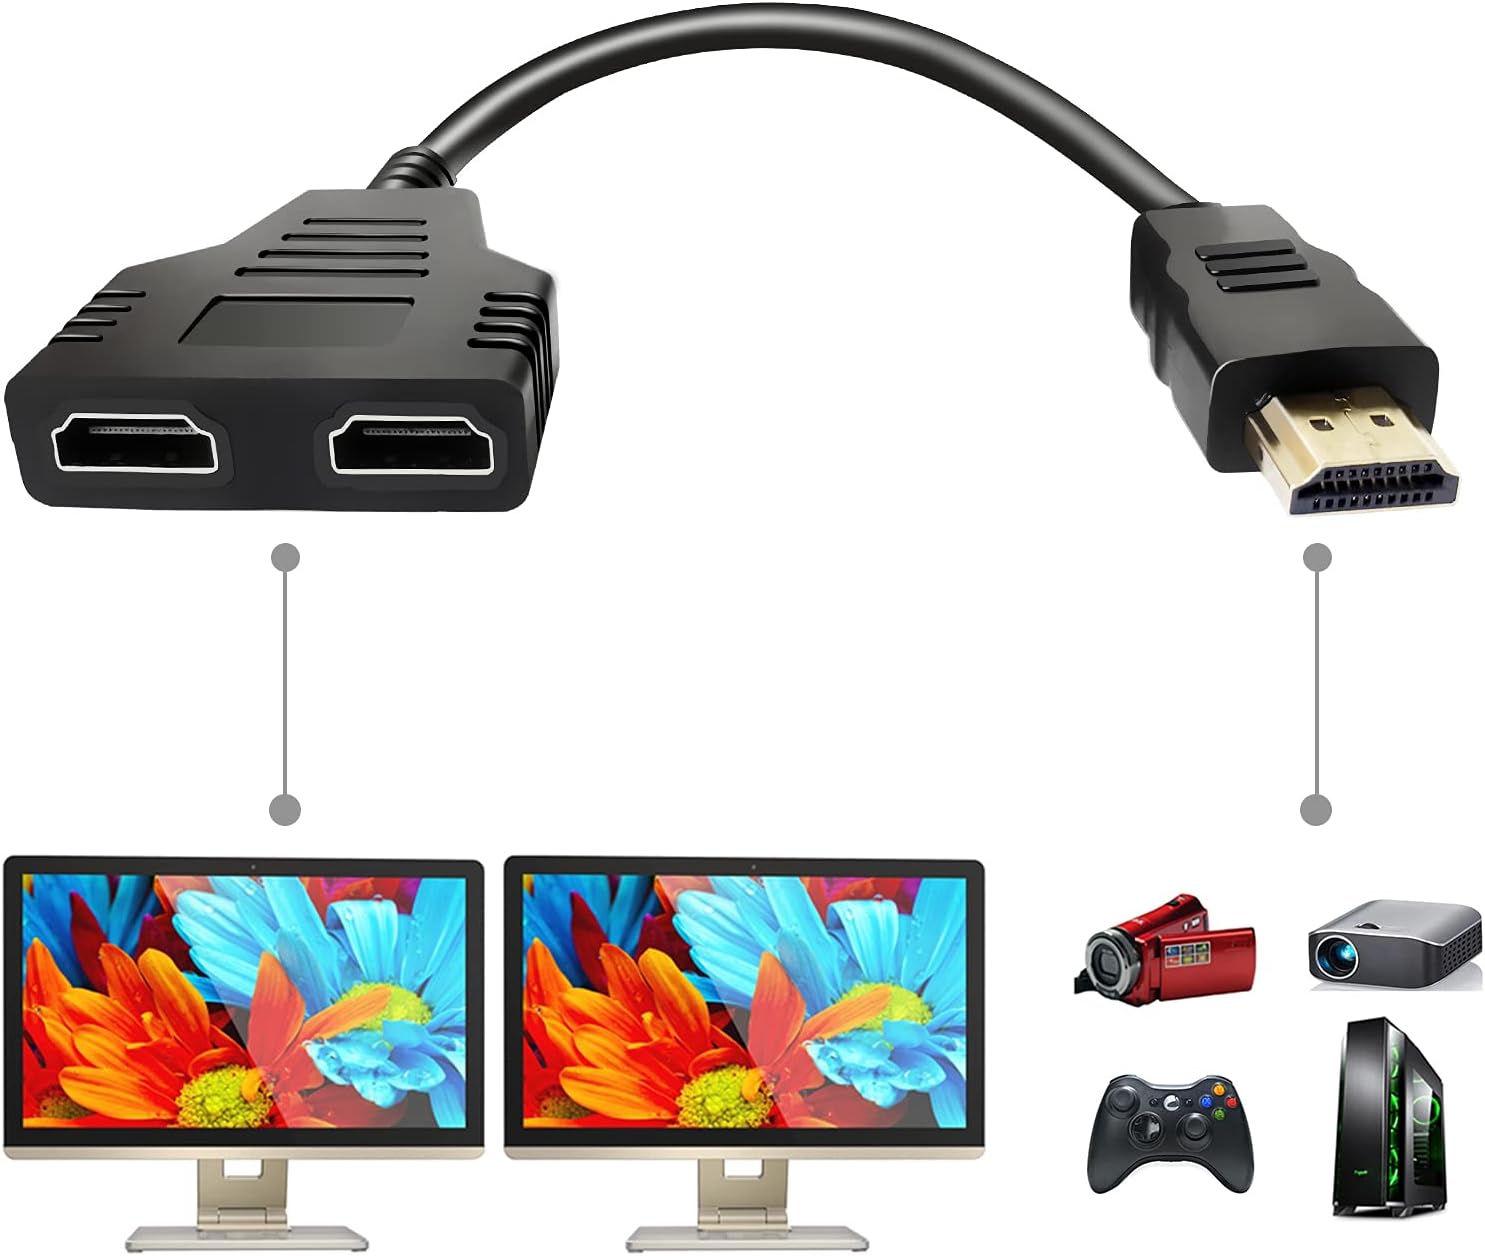 HDMI Splitter Adapter Cable - HDMI Splitter 1 in 2 [...]